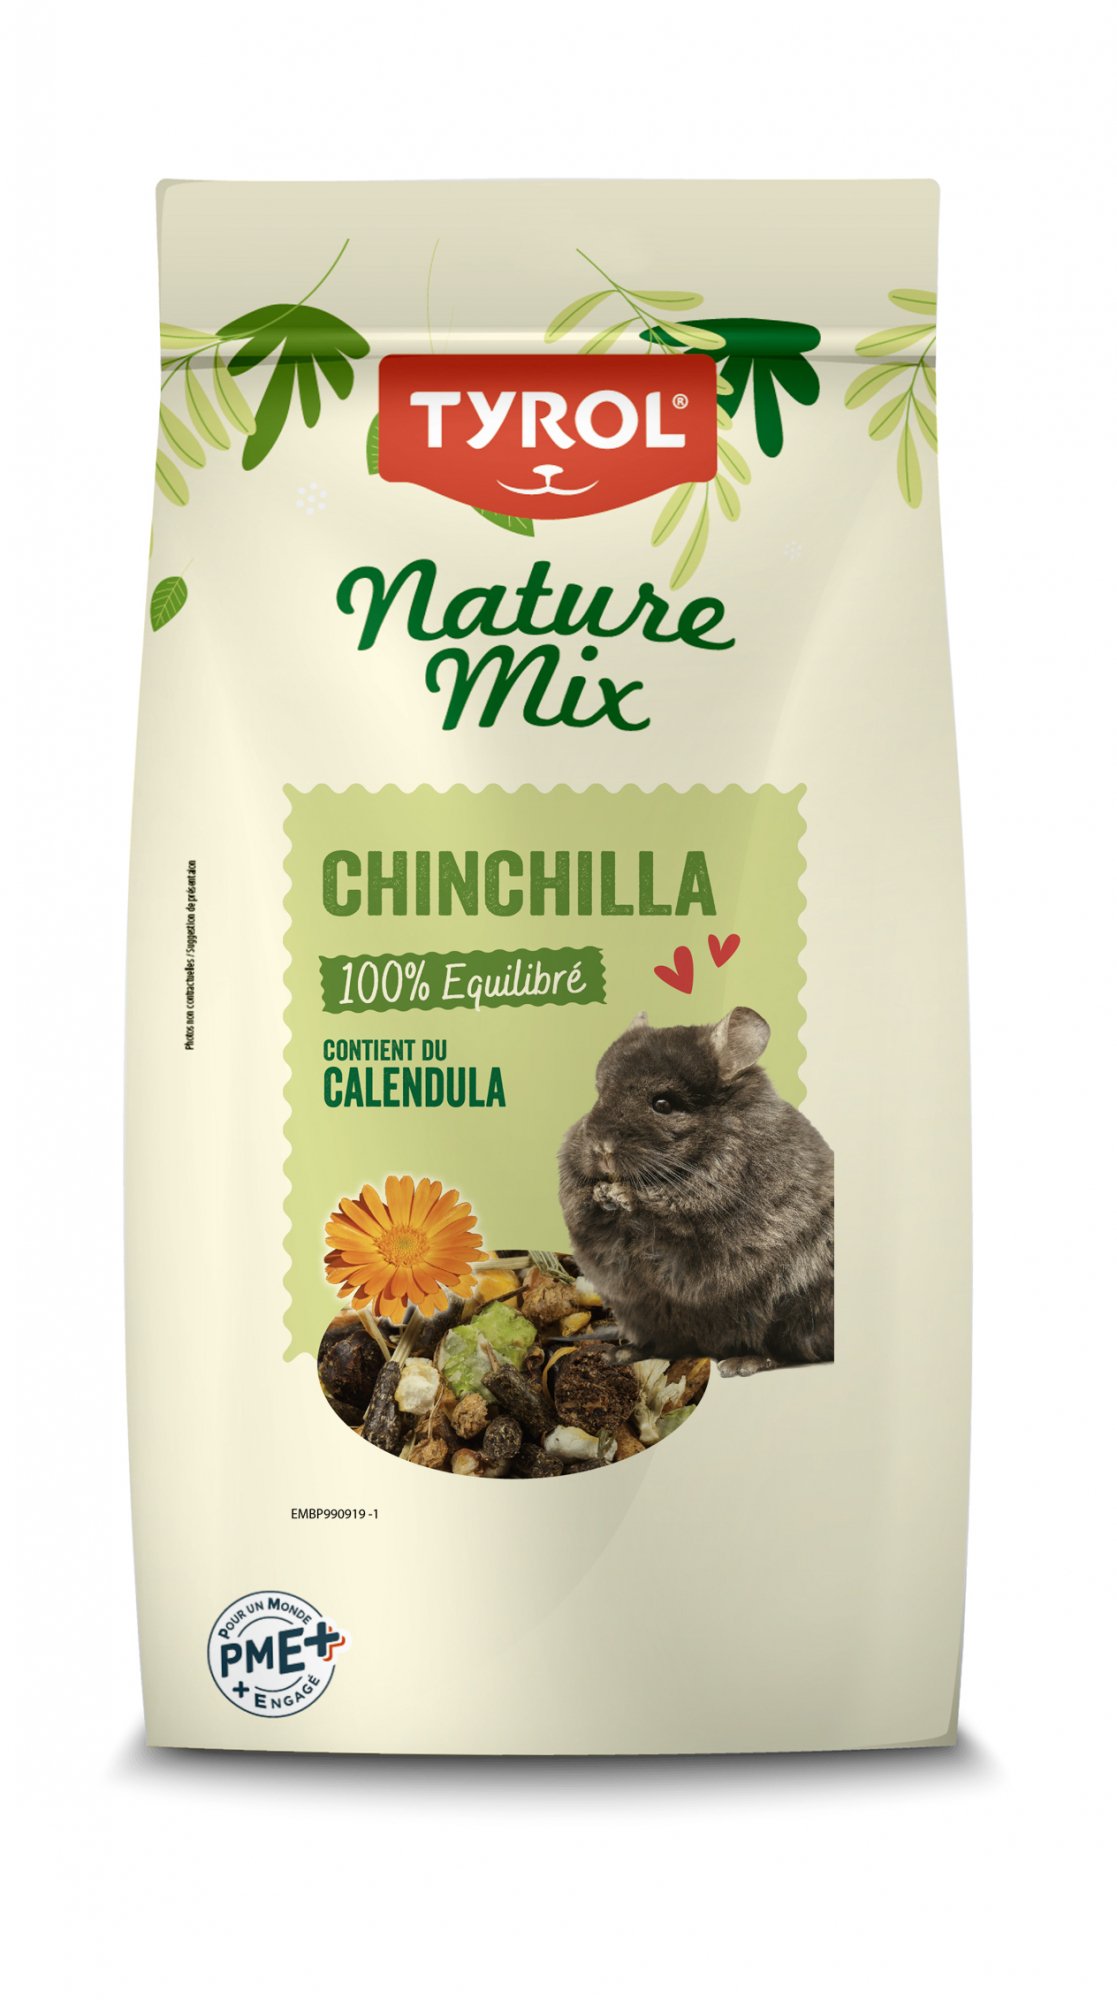 Mix voor chinchilla's